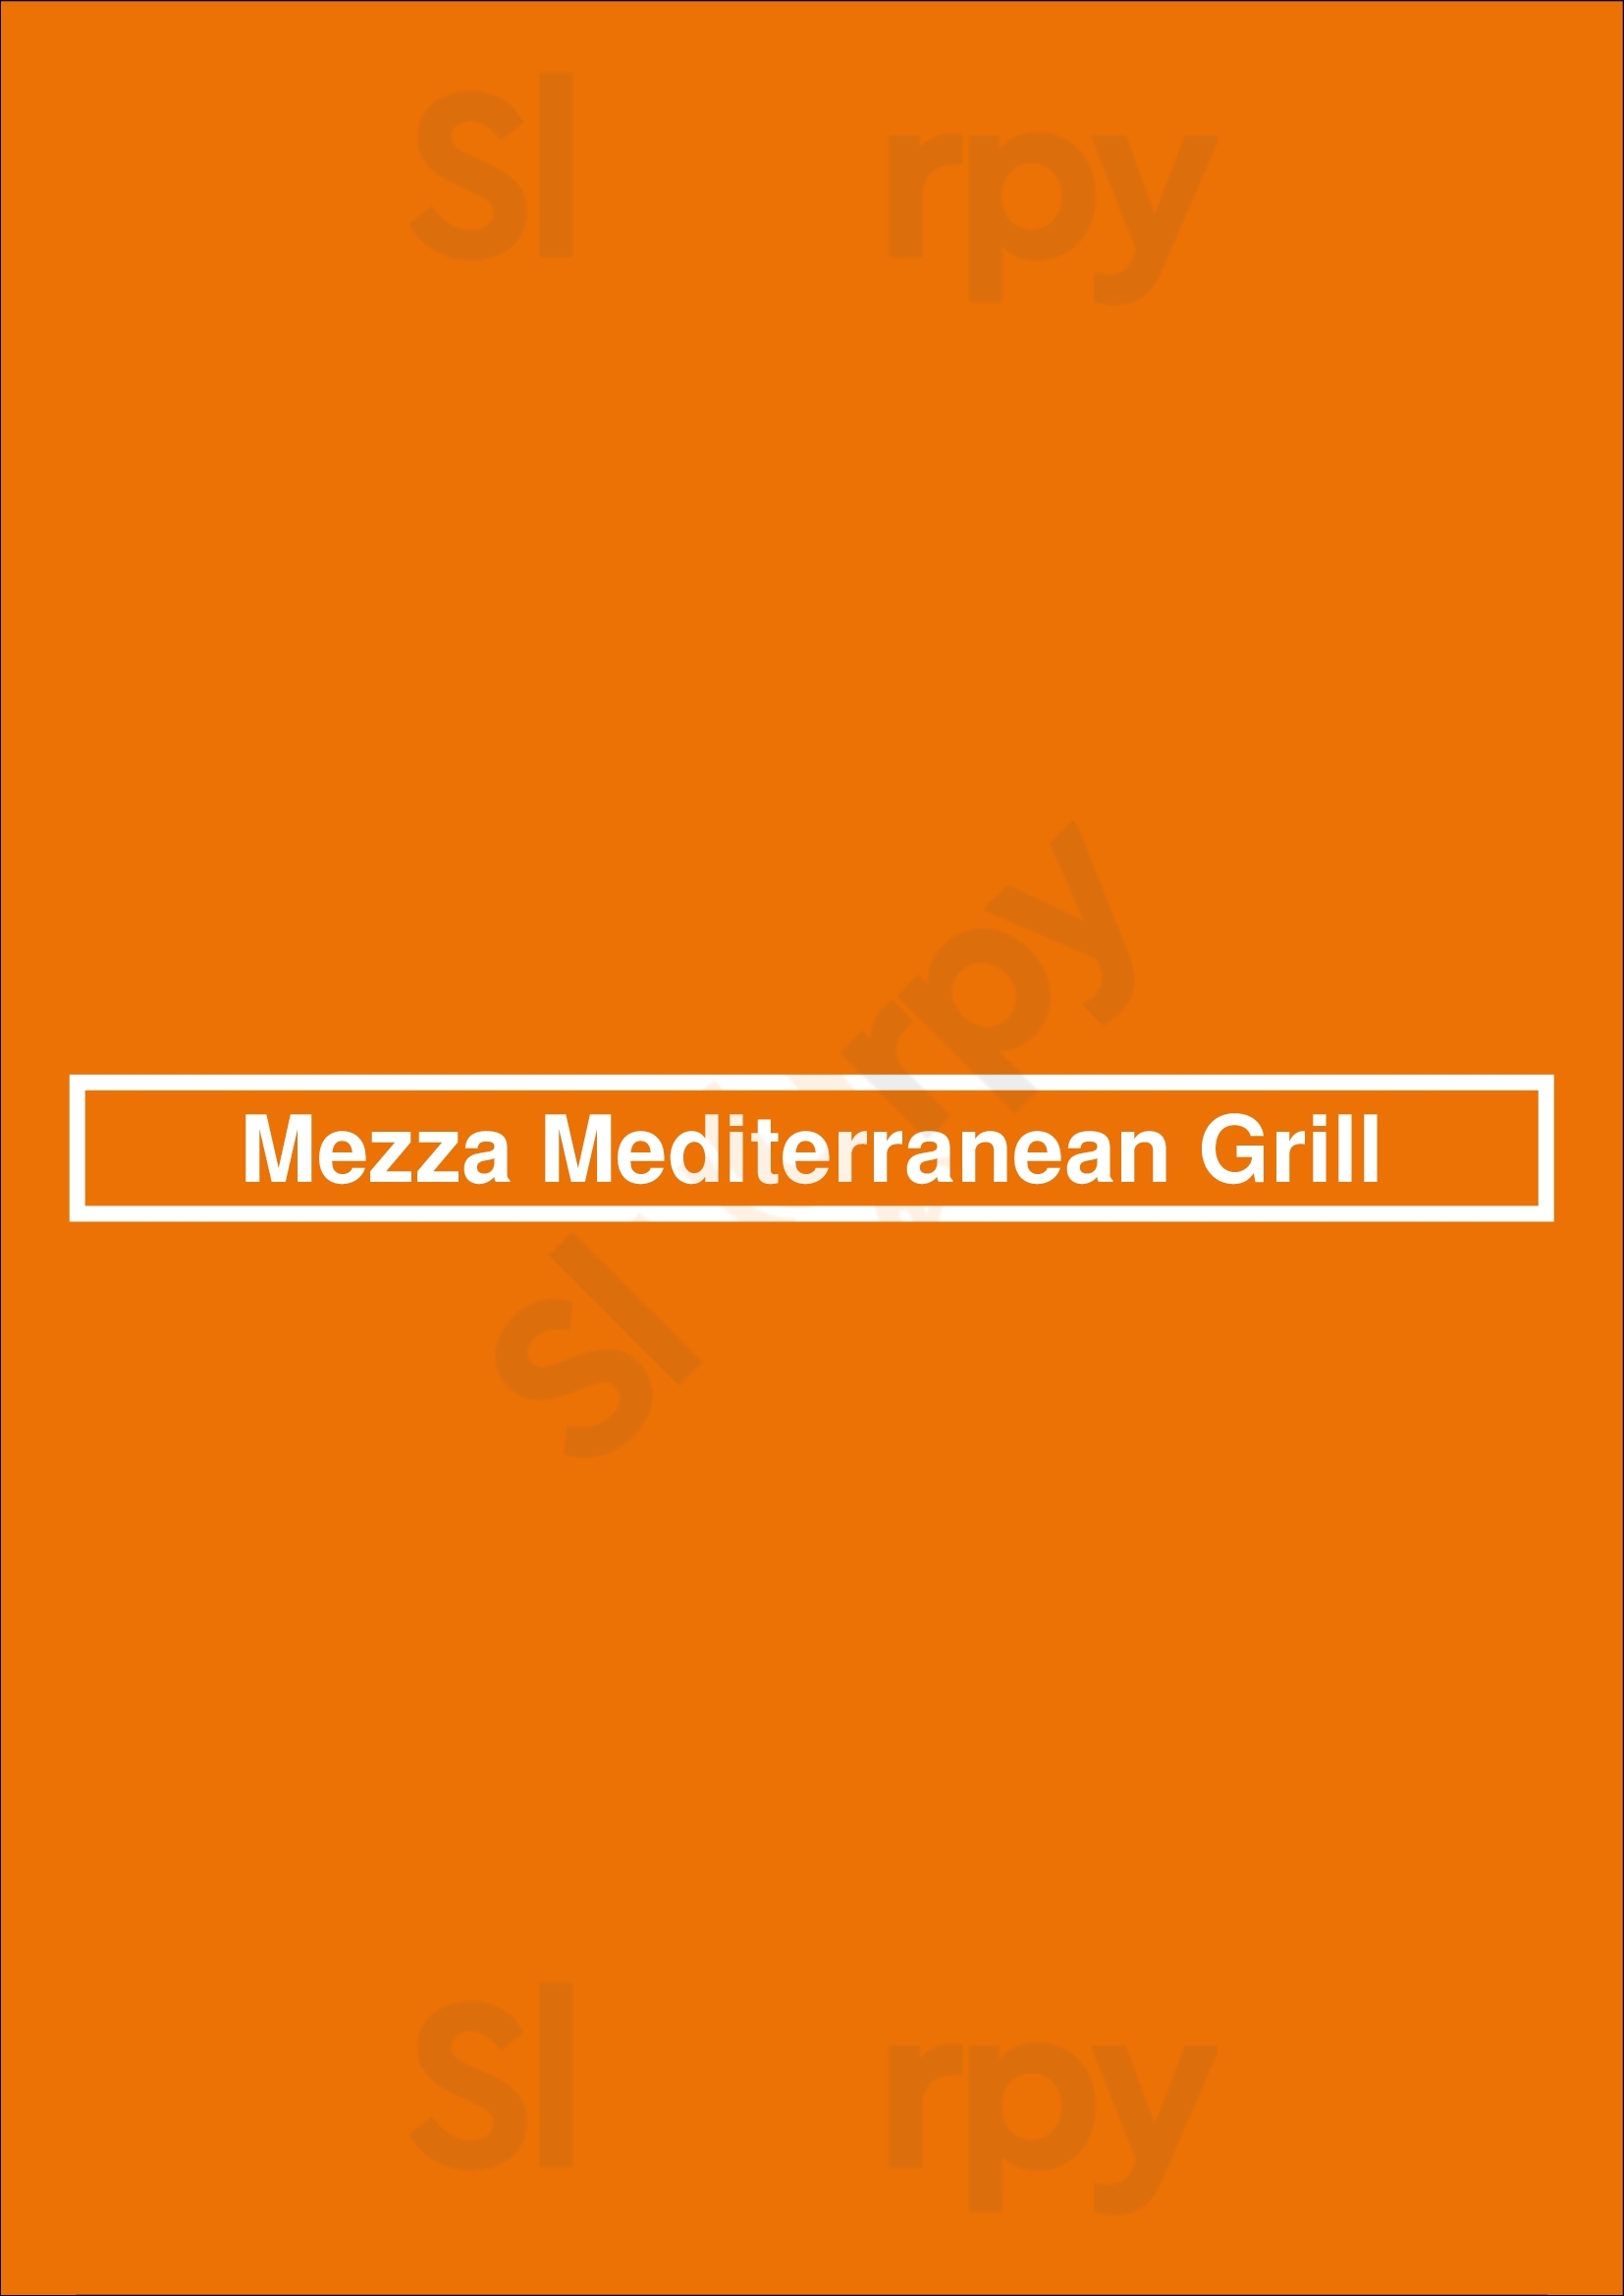 Mezza Mediterranean Grill Chicago Menu - 1